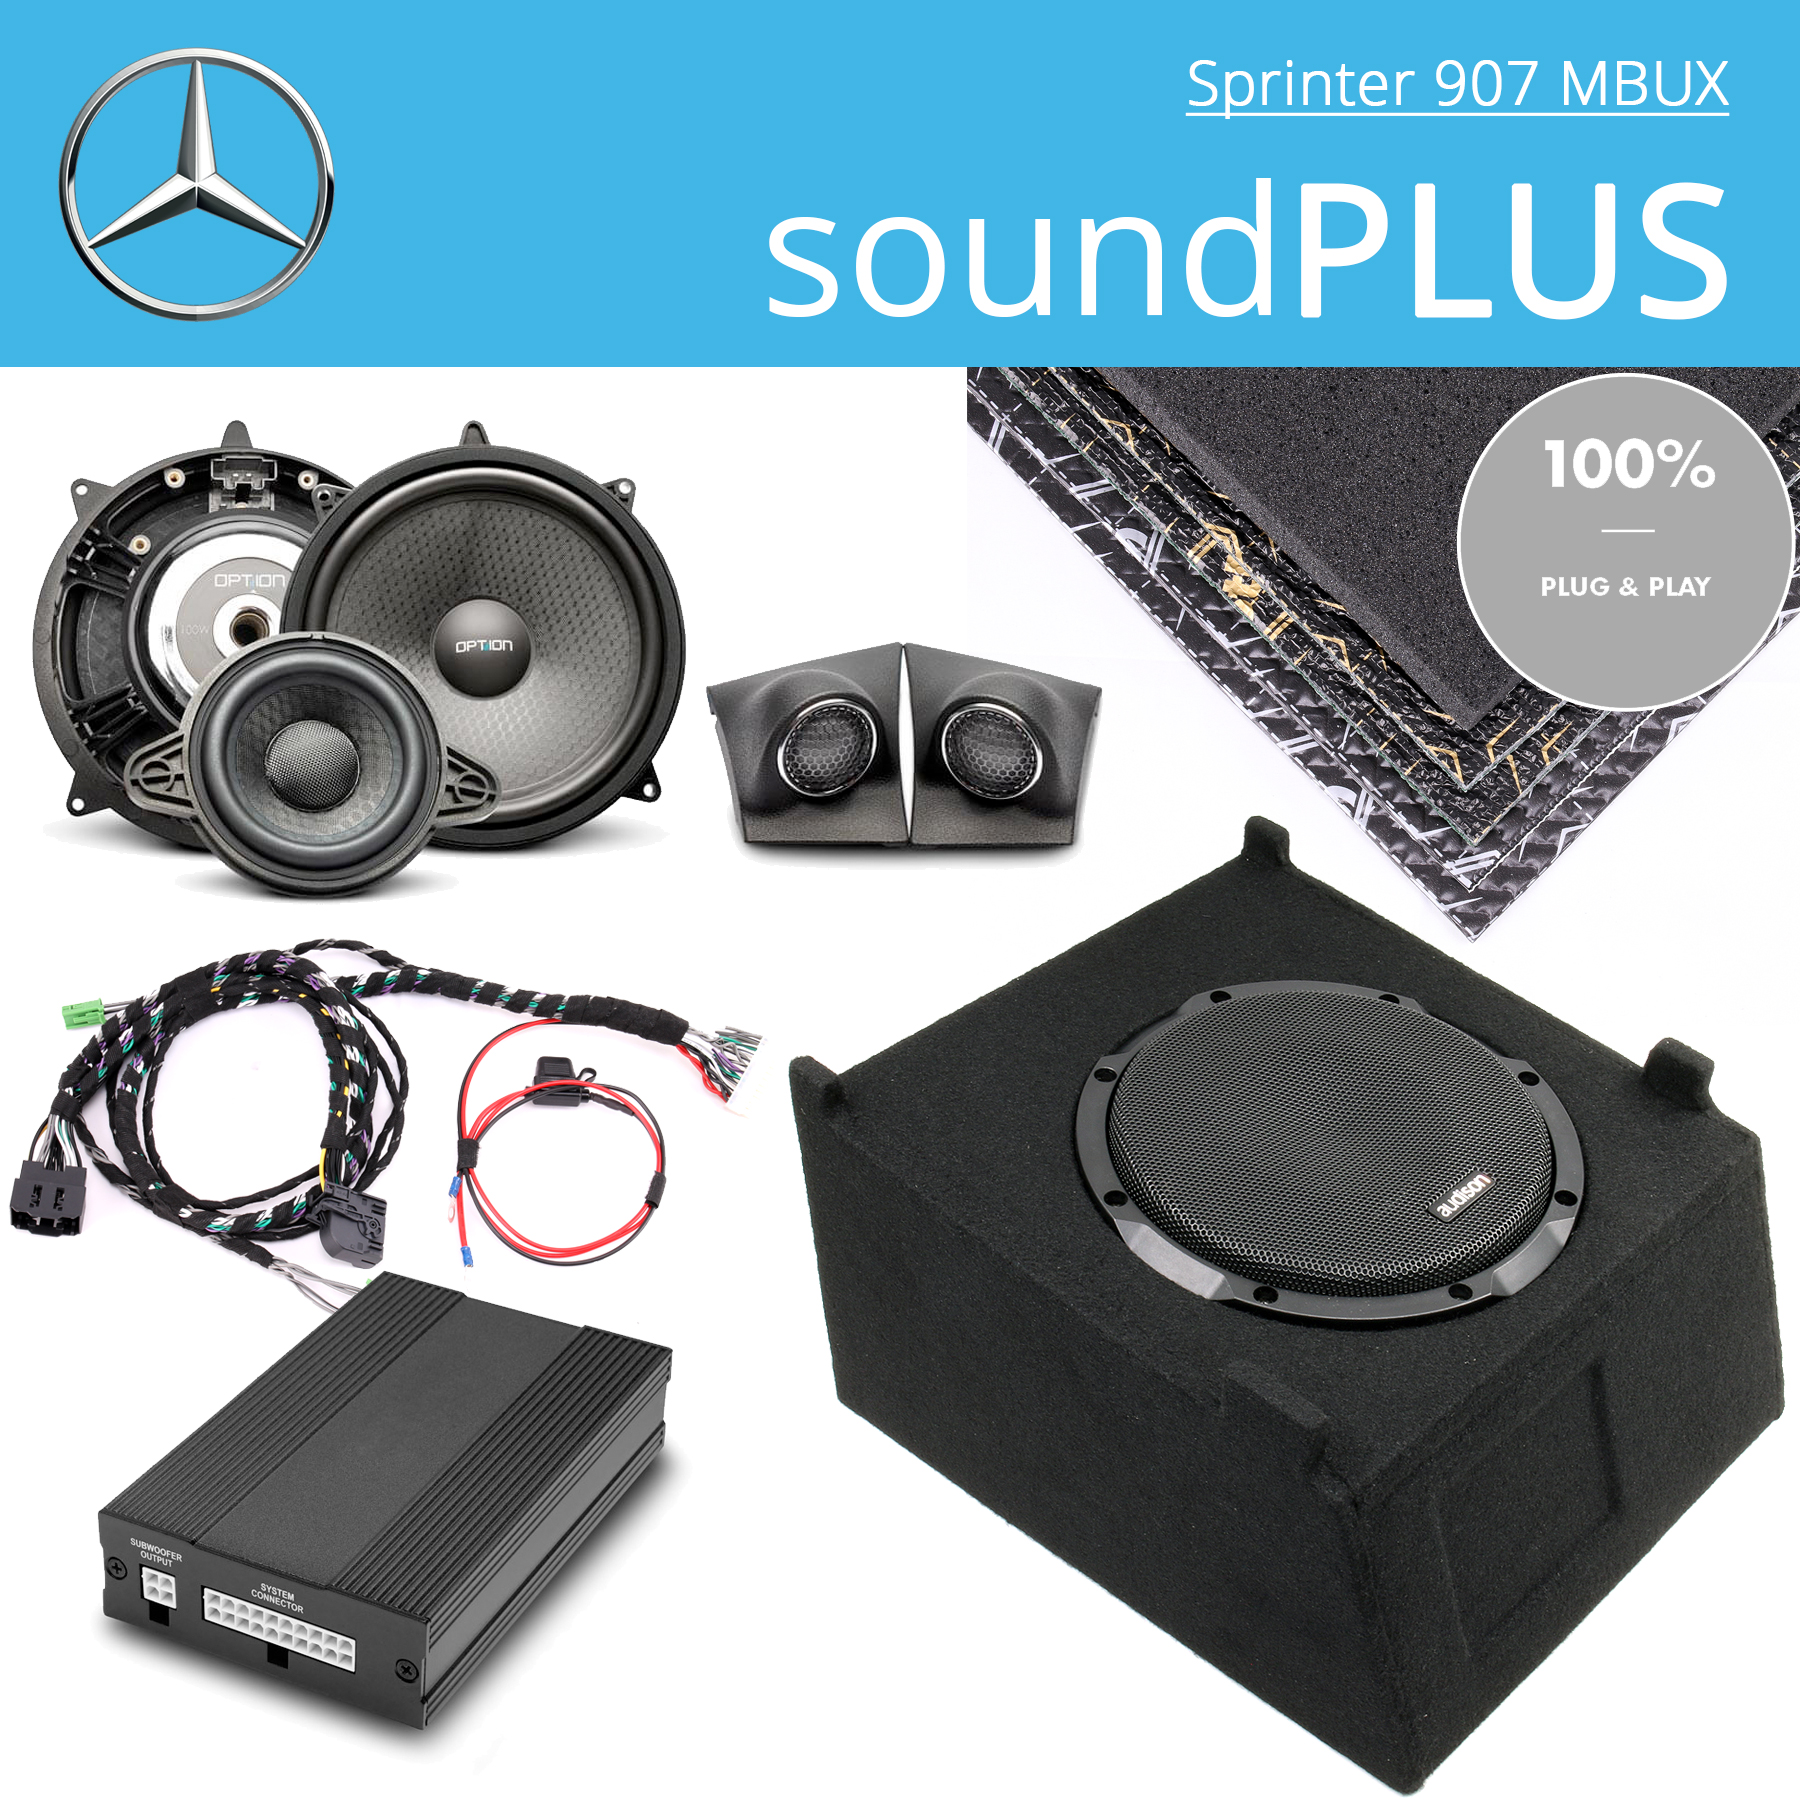 soundPLUS Mercedes Sprinter 907 MBUX